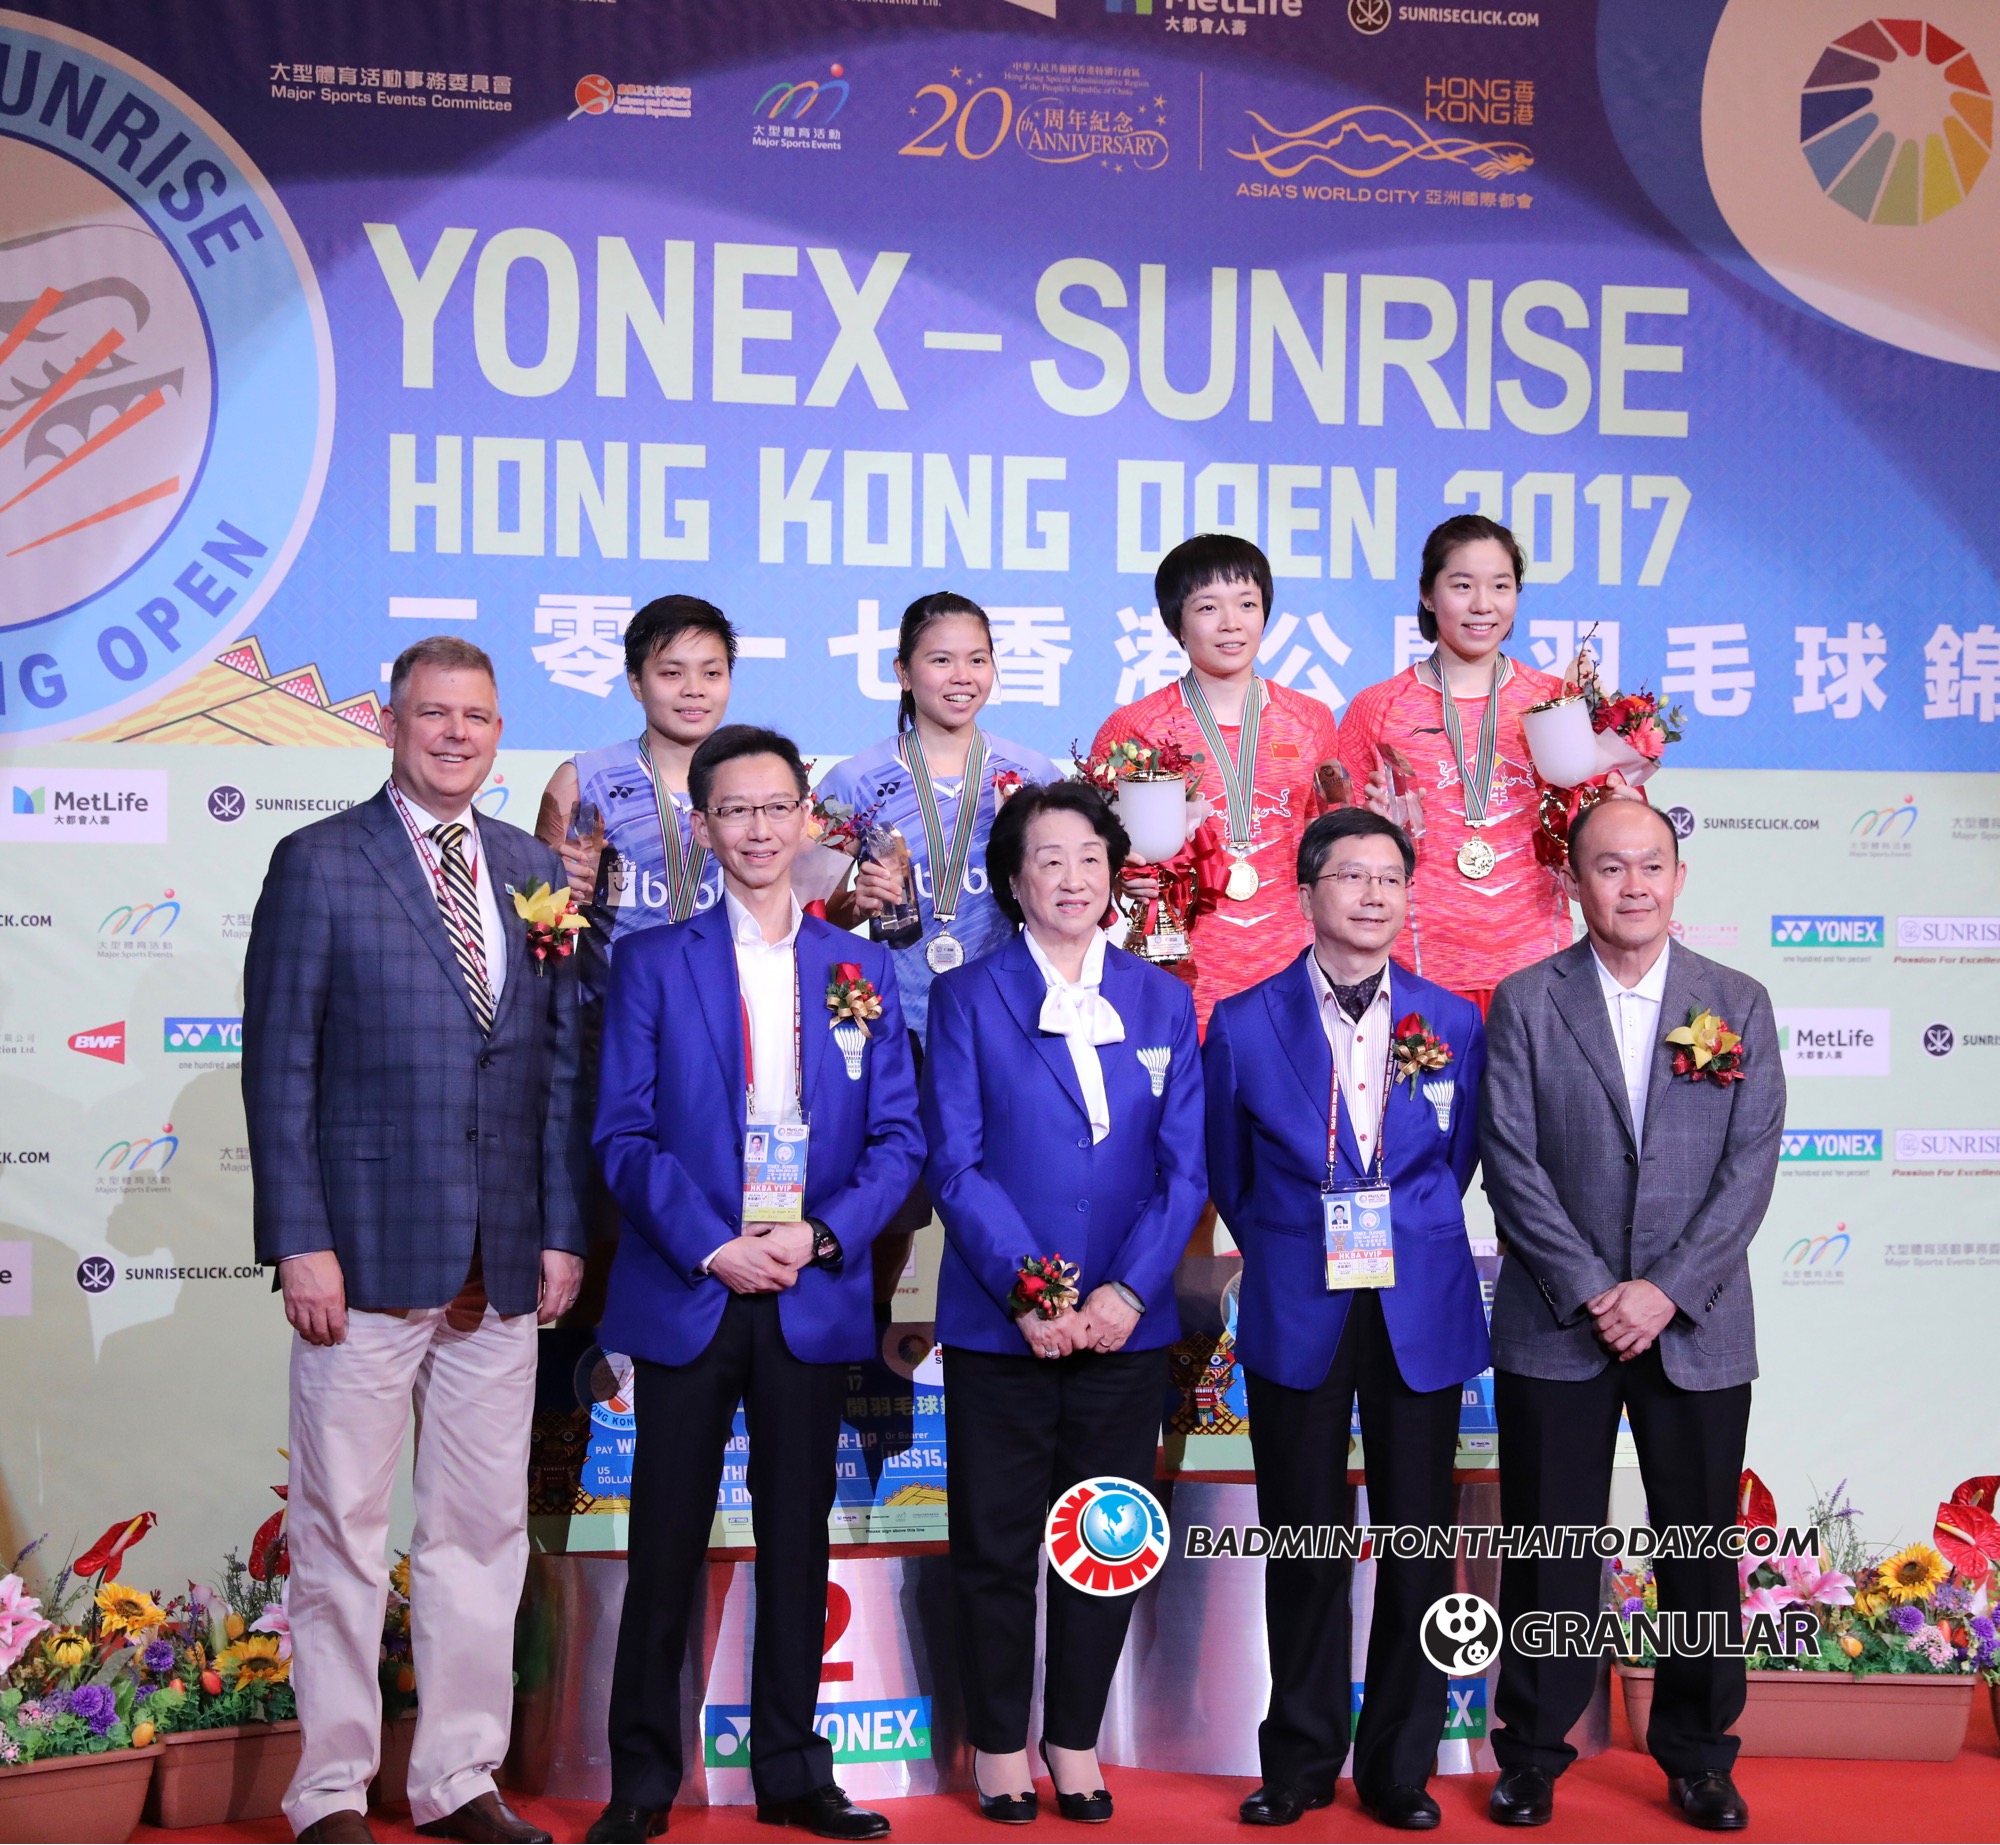 CHEN Qingchen - JIA Yifan โชว์ฟอร์มมือ 1 โลกคว้าแชมป์หญิงคู่ฮ่องกงโอเพ่น